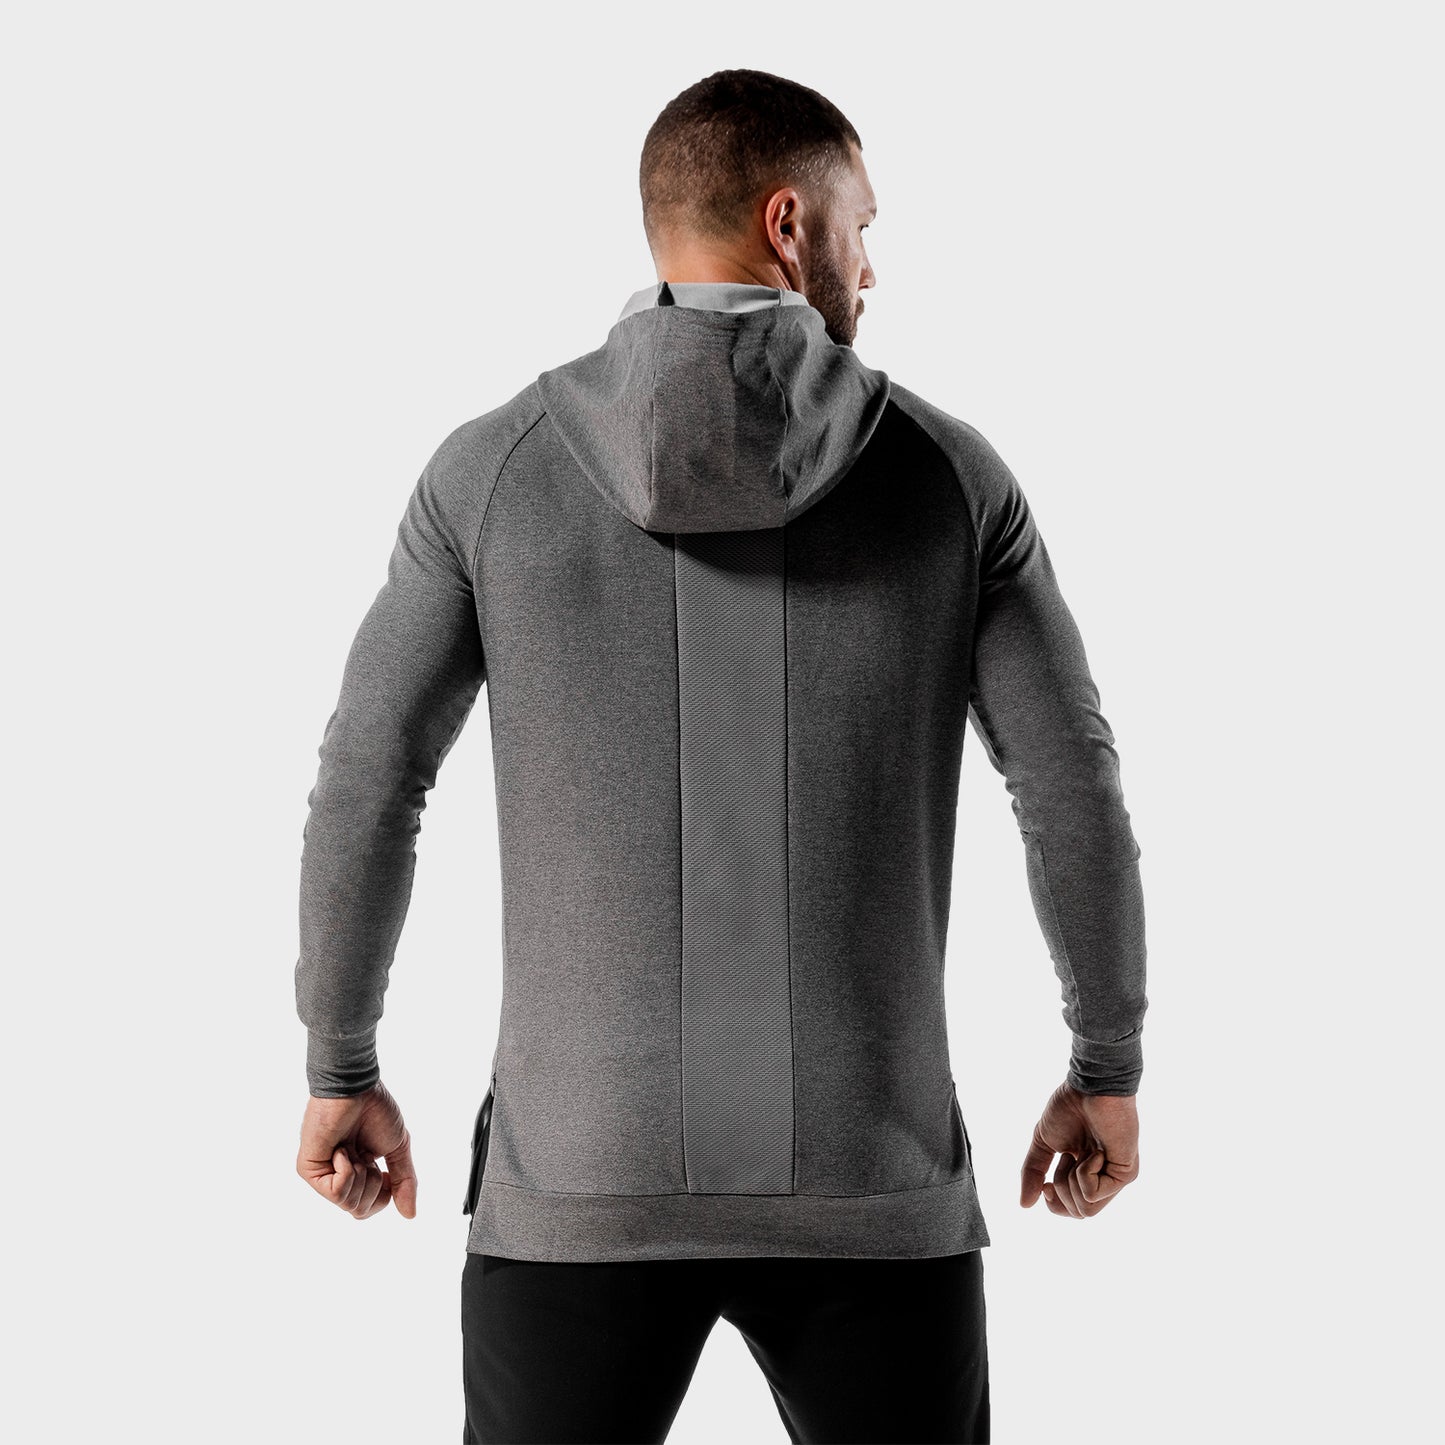 squatwolf-gym-wear-statement-hoodie-grey-workout-hoodies-for-men